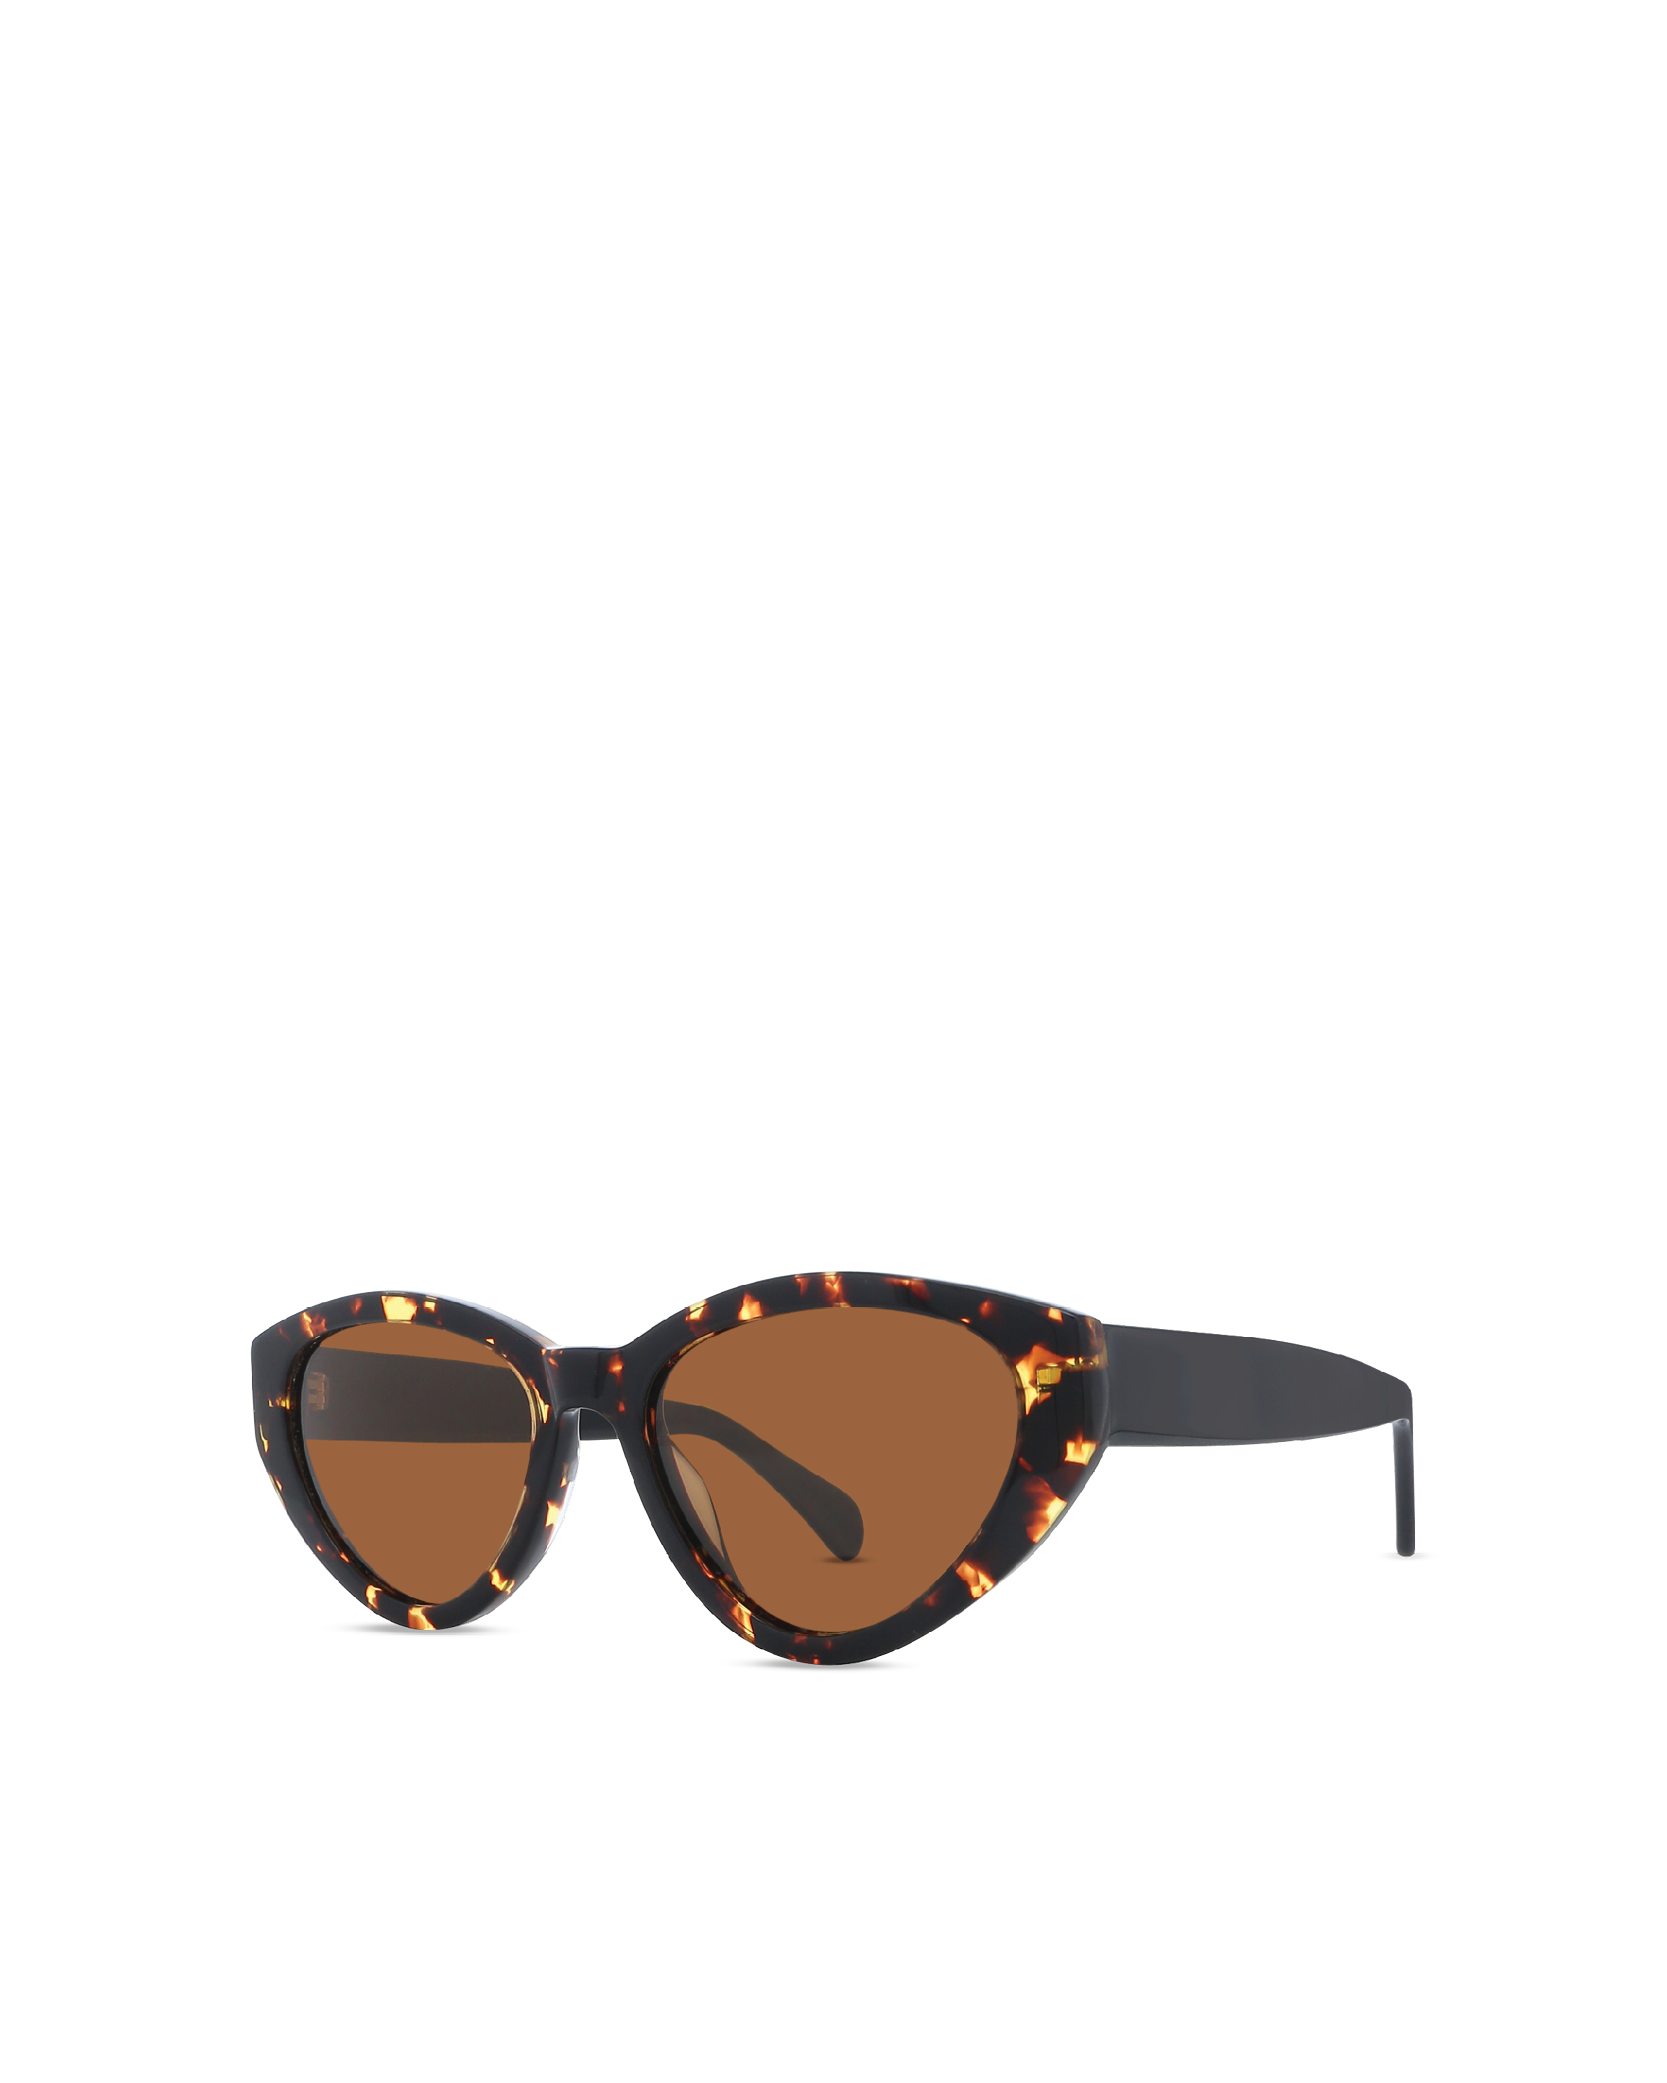 THE HART - AMBER TORT & BLACK-BROWN  $79.95 SUNGLASSES BANBE Banbé Eyewear